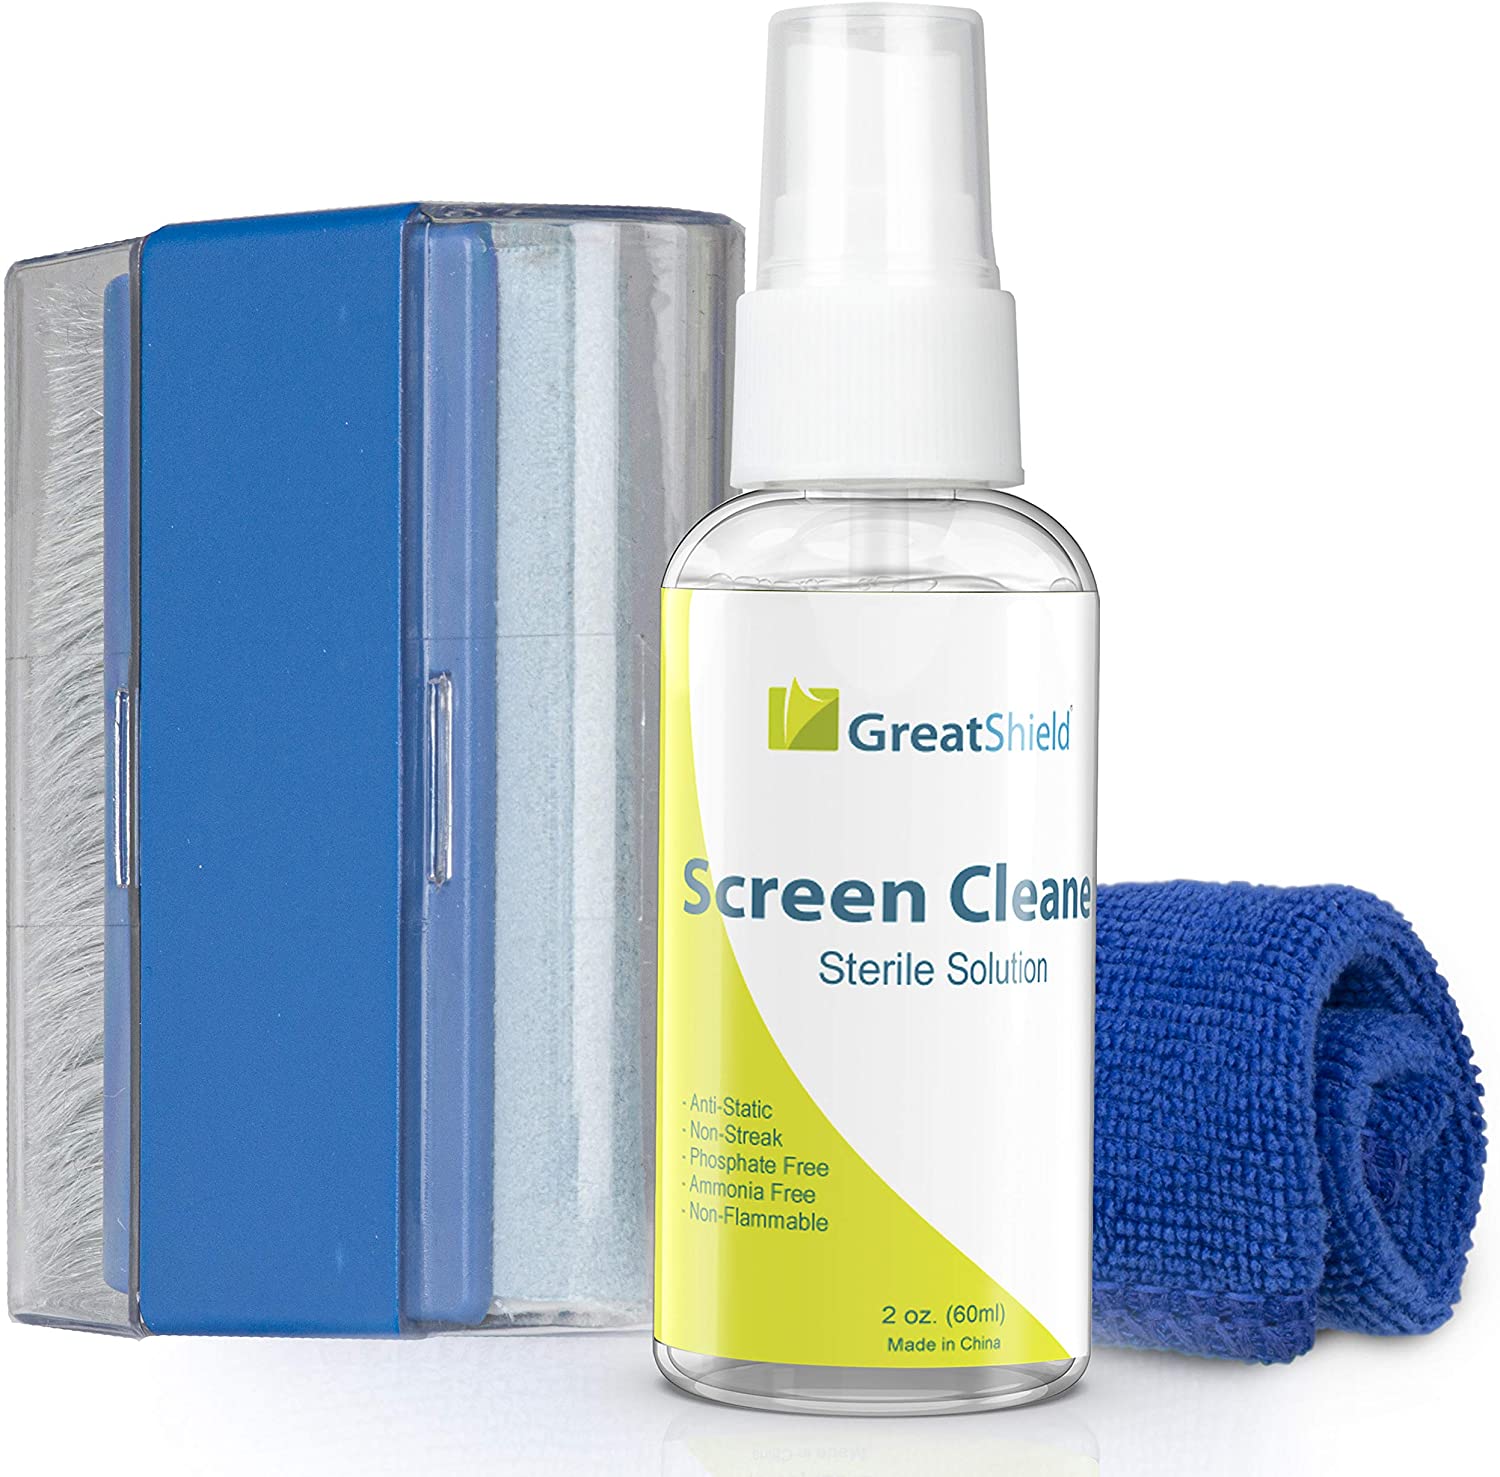 GreatShield Universal Screen Cleaning Kit